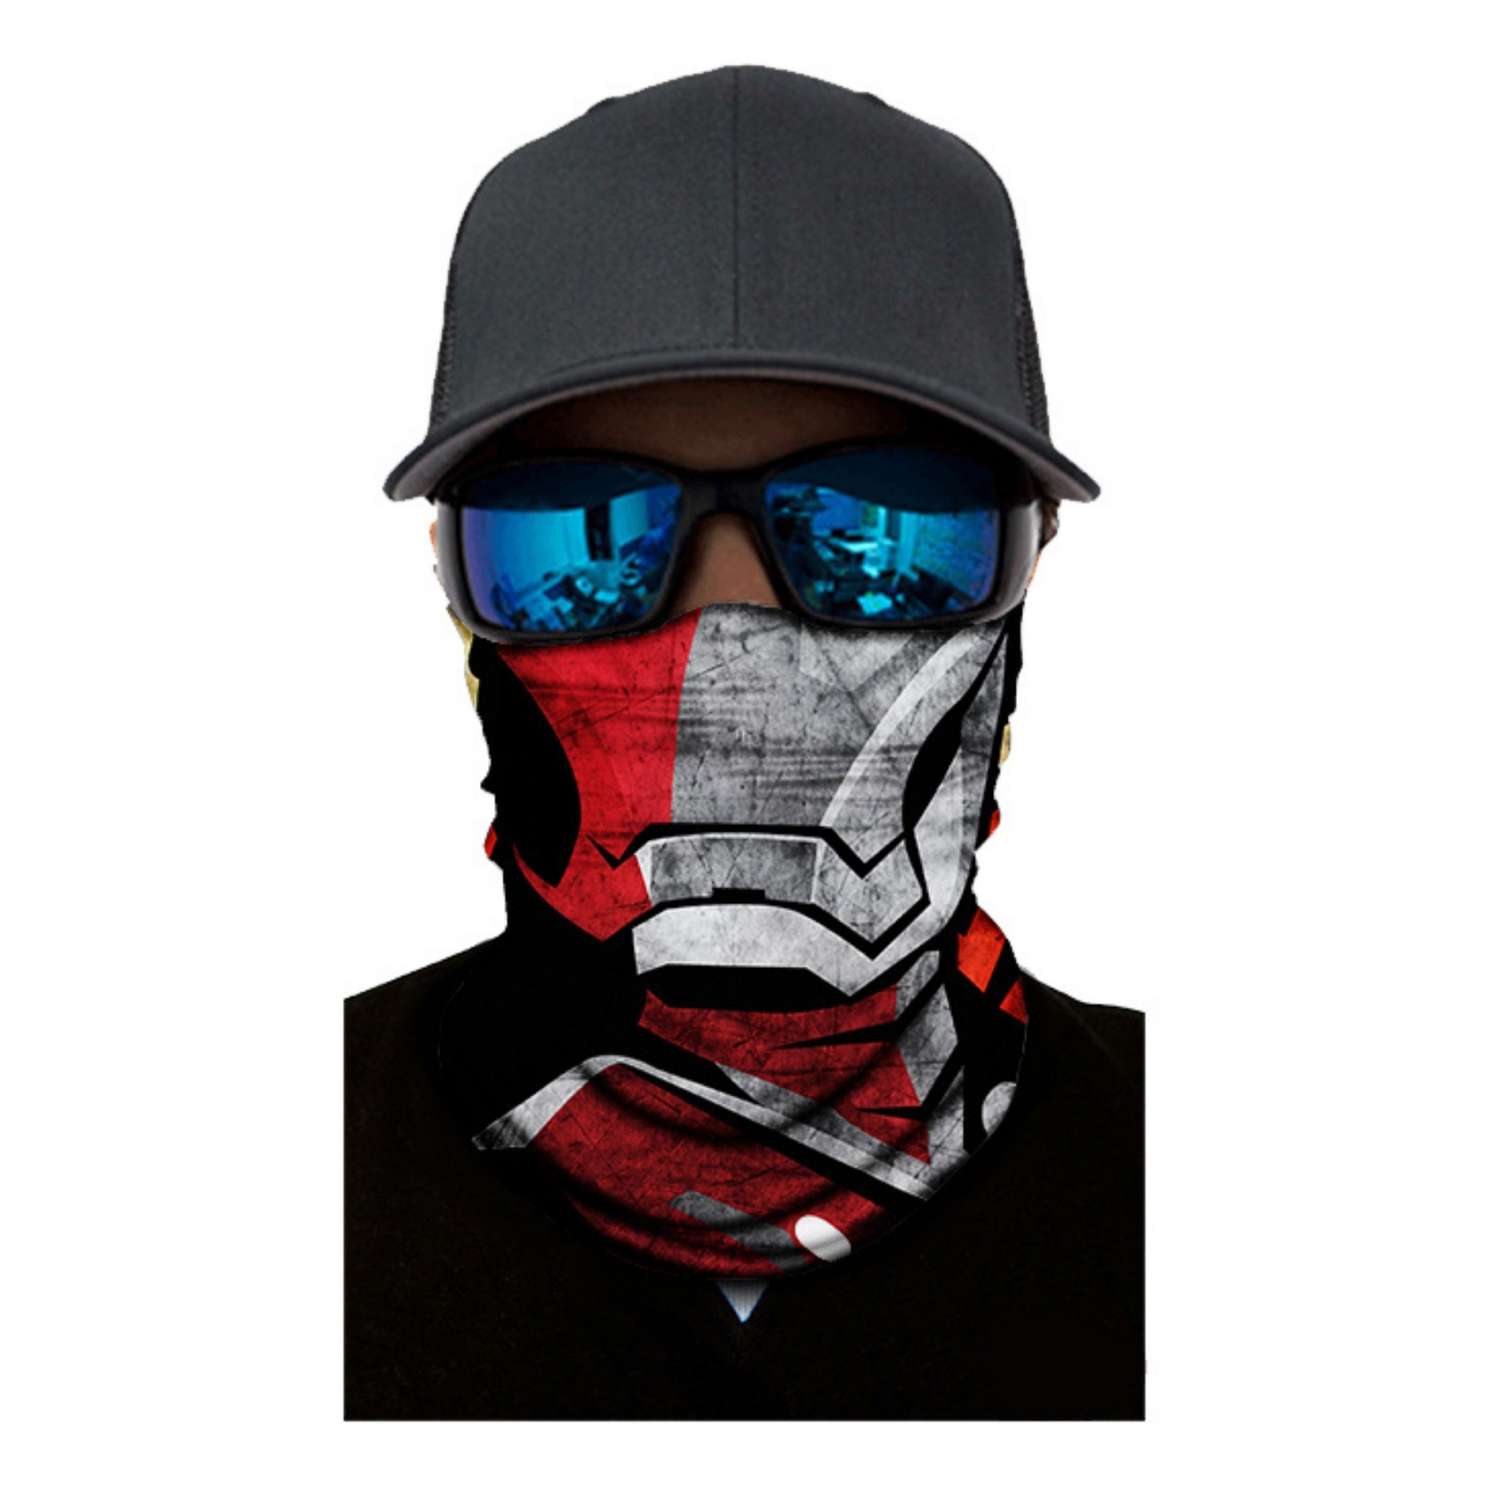 Набор X-Treme Shooter маска очки патронташ патроны - фото 5